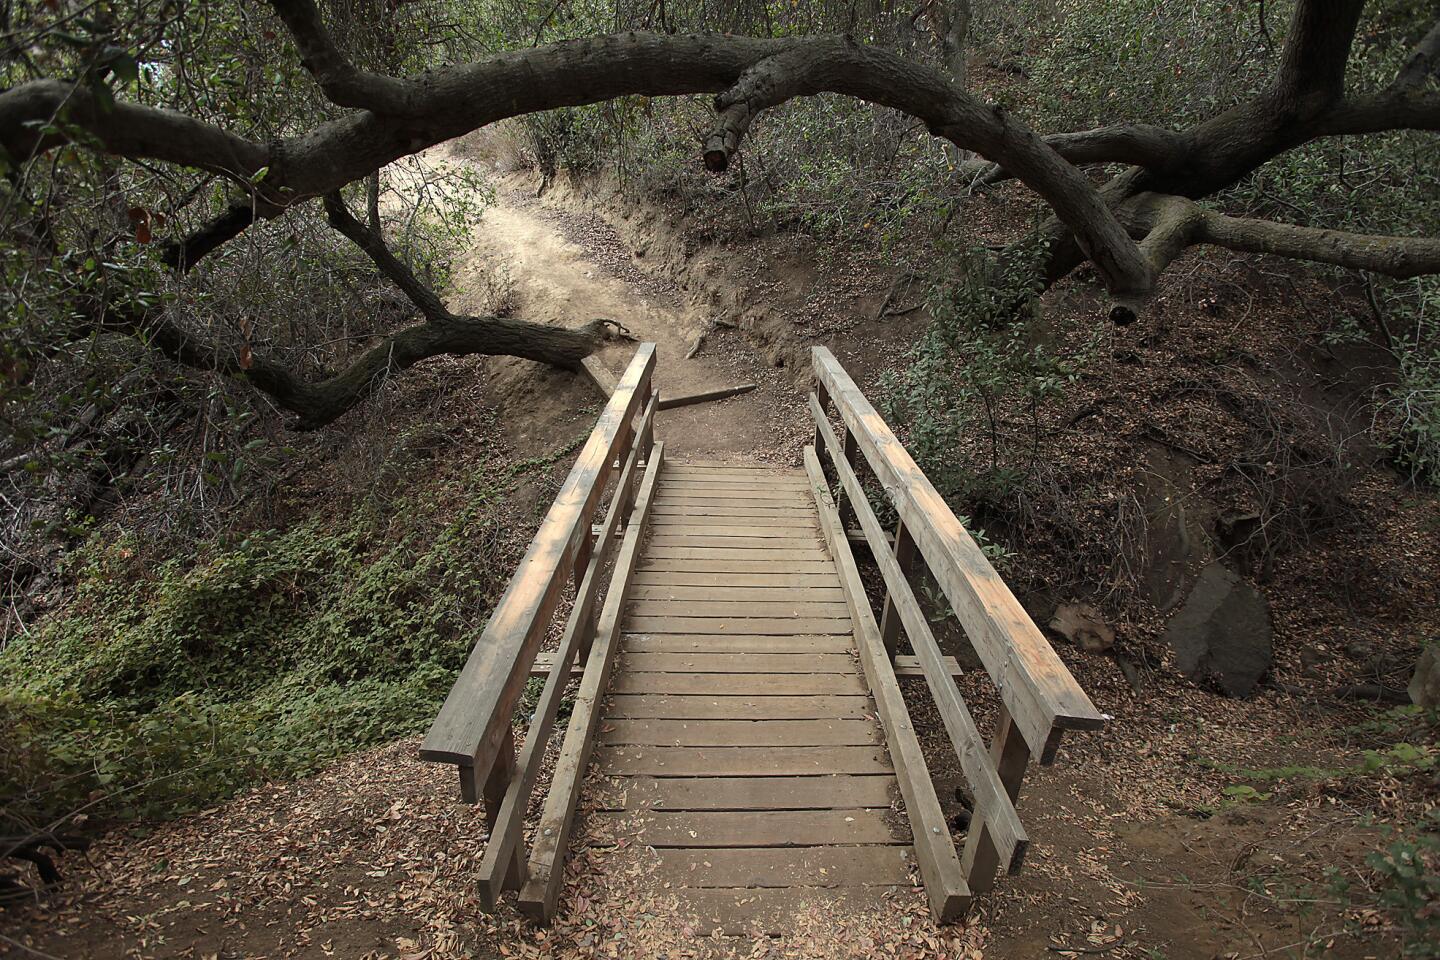 Best Guide to Hike Paradise Falls, an LA-Area Hidden Gem